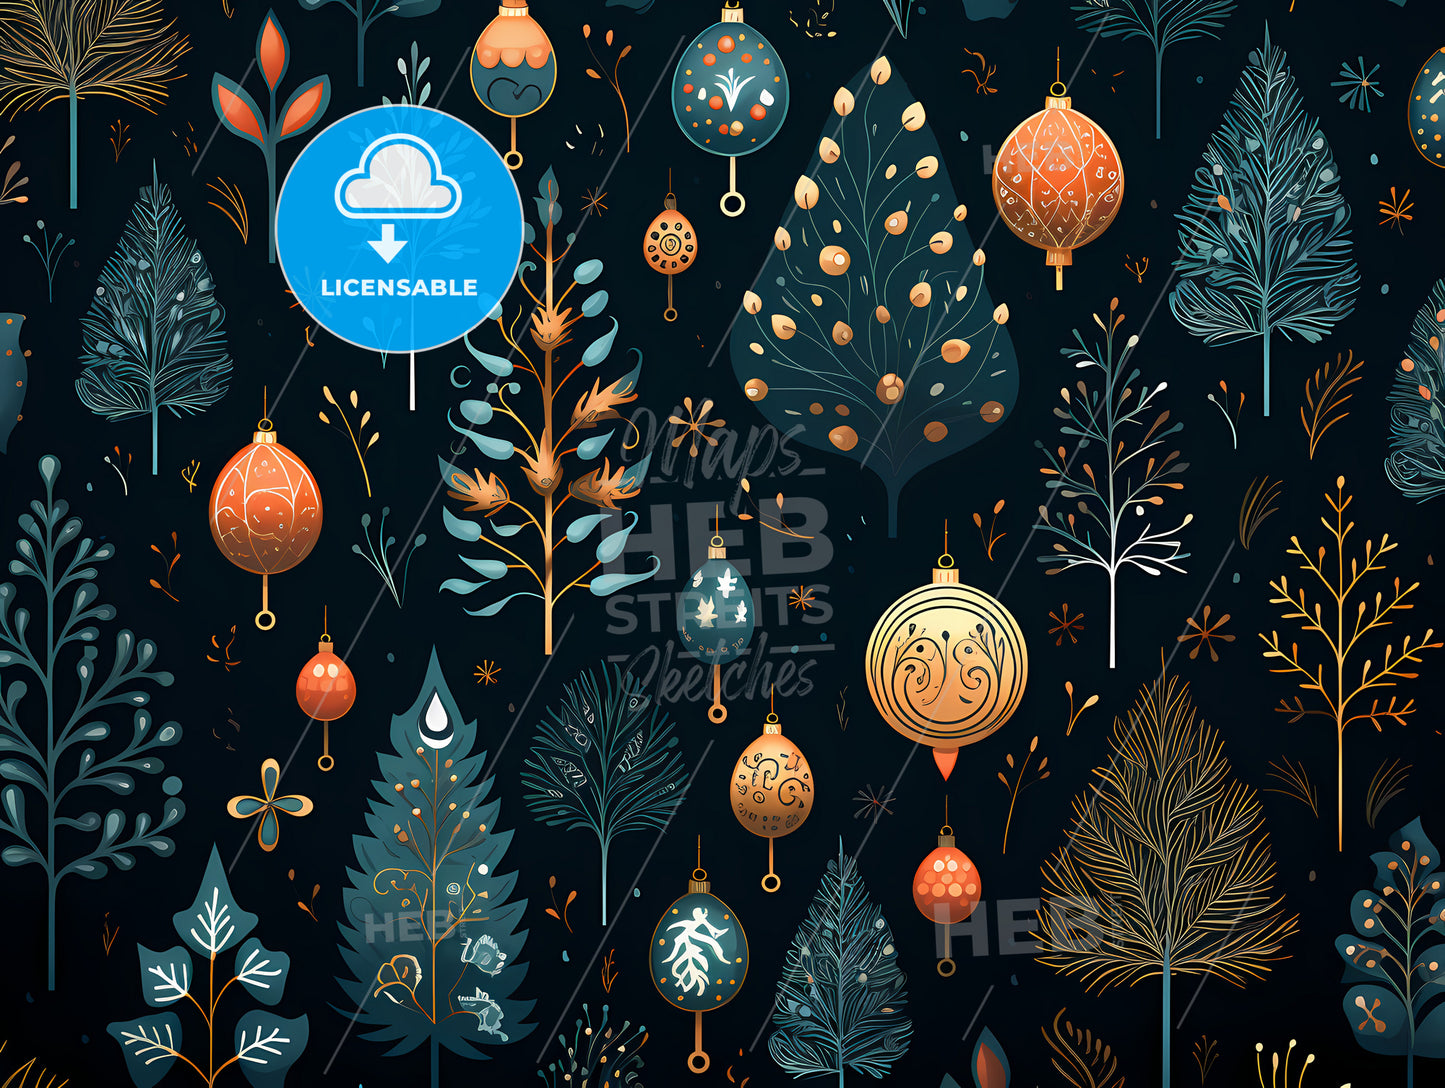 Christmas Greetings - A Pattern Of Christmas Trees